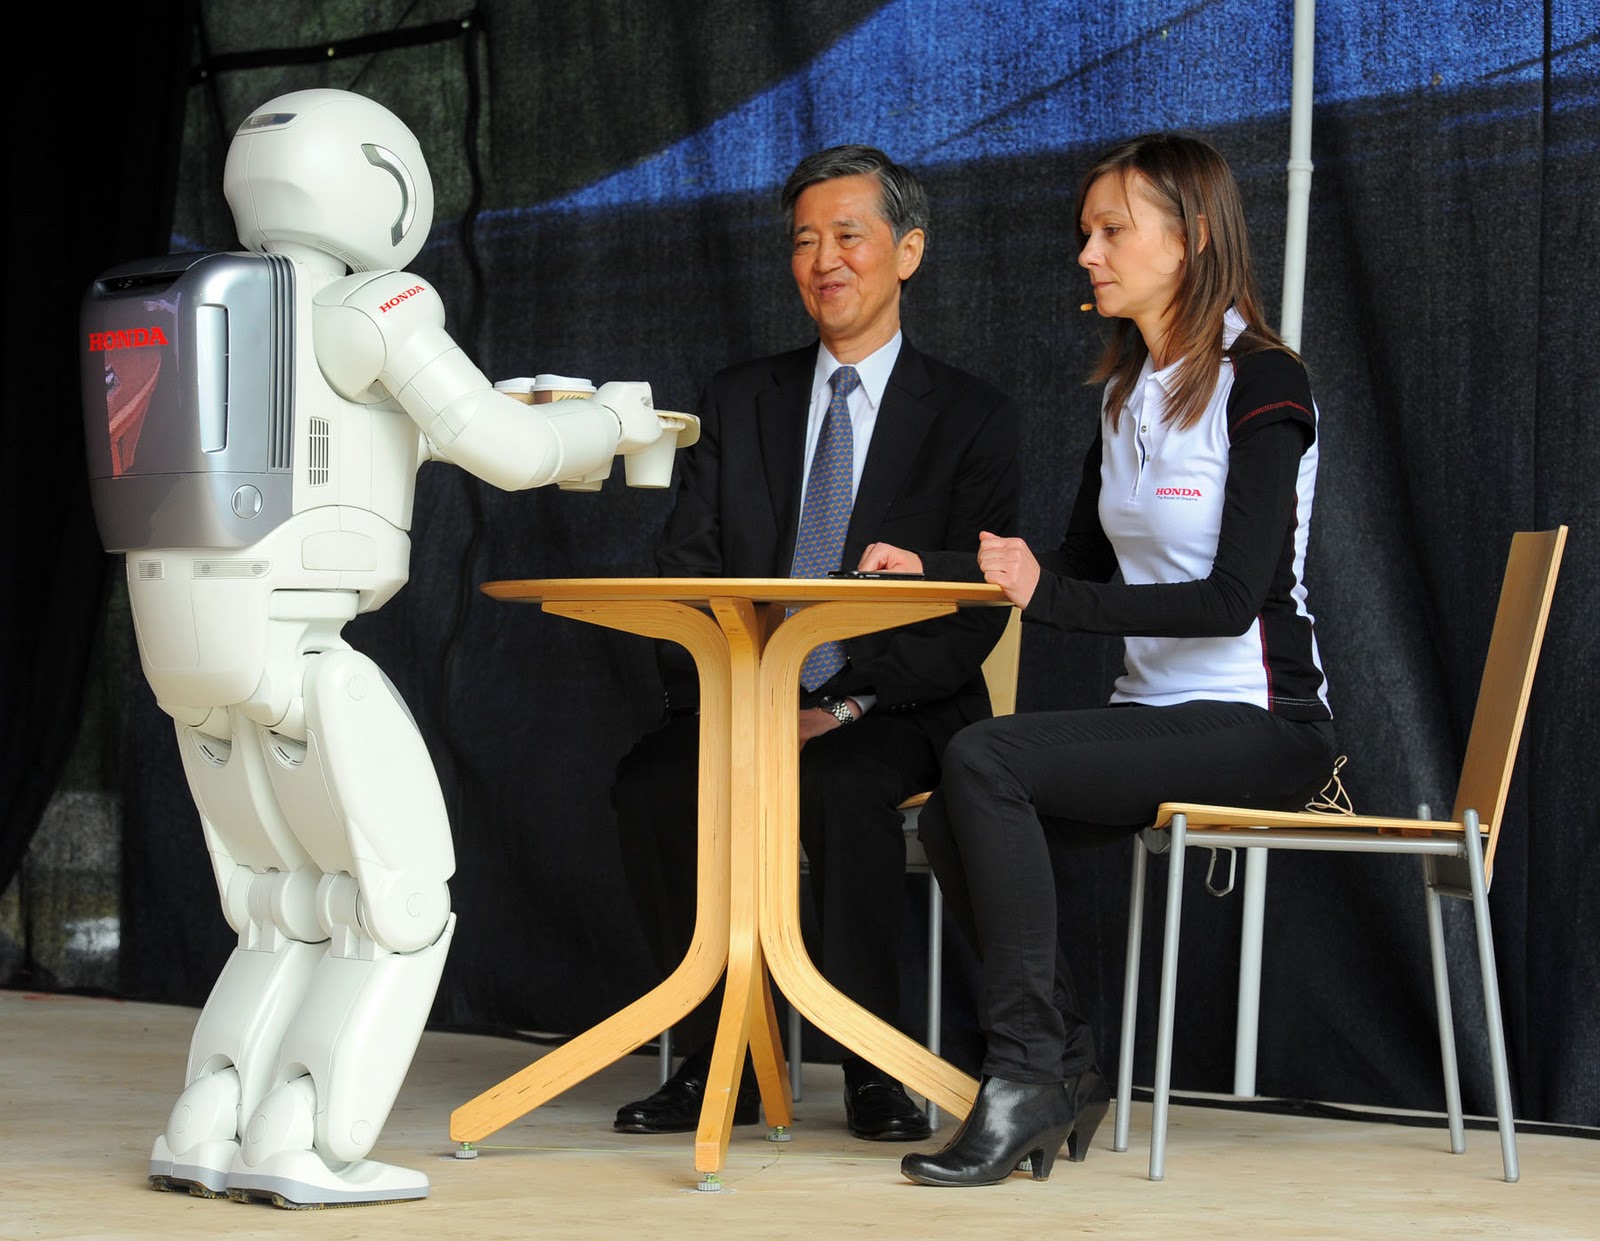 presentation on humanoid robot